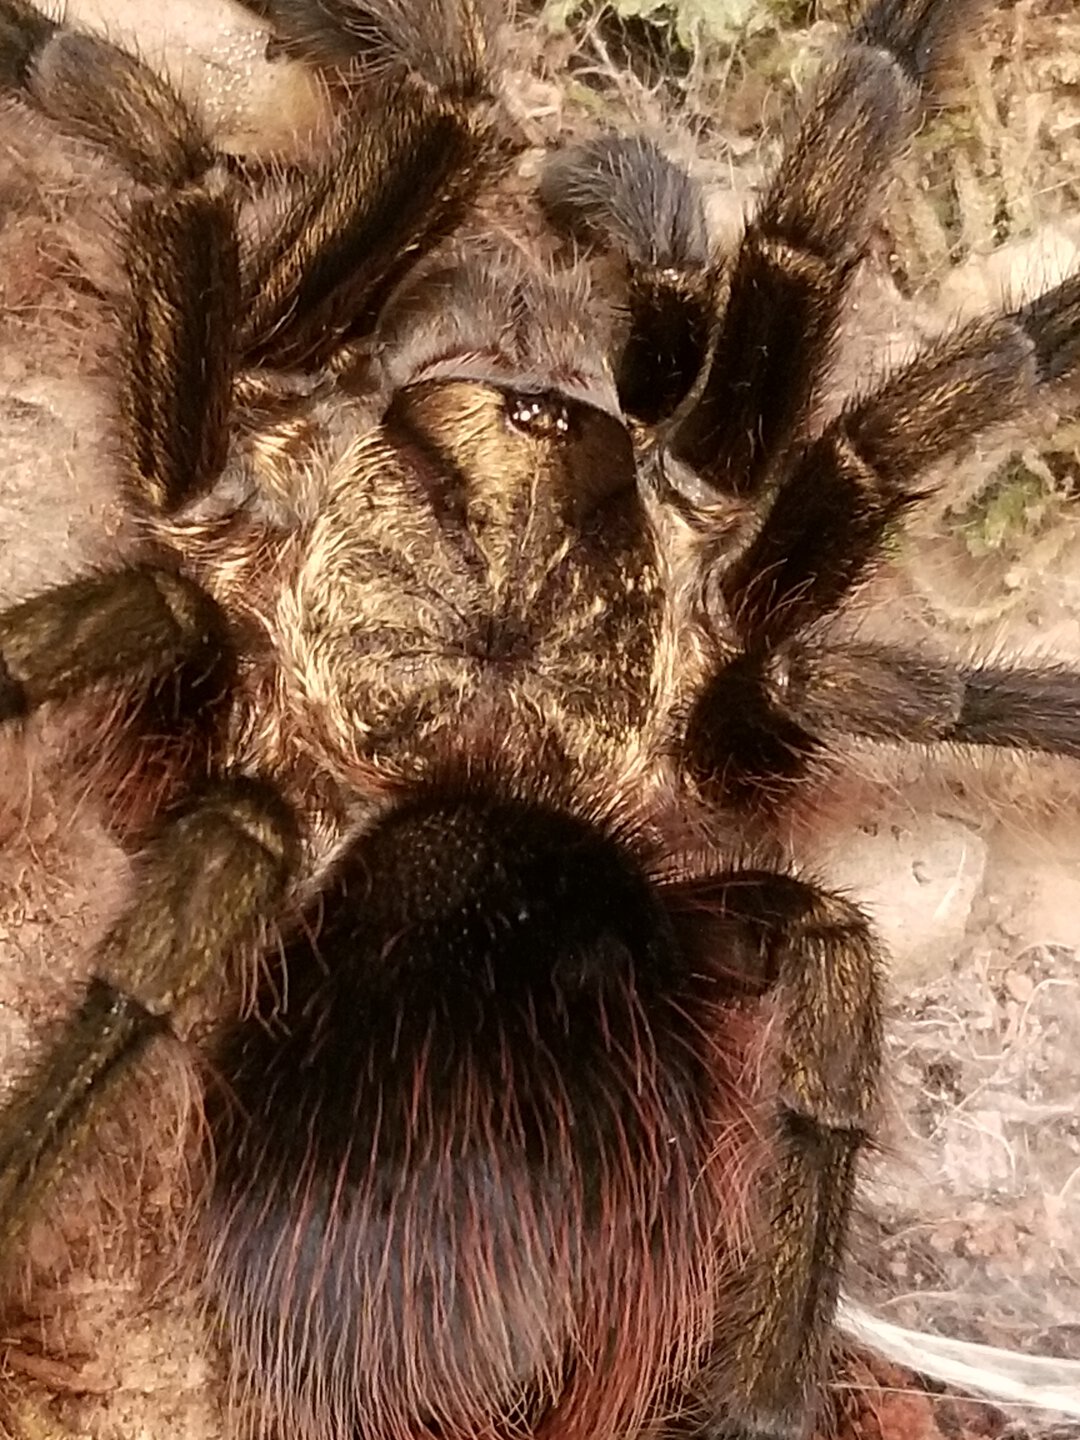 Truly a bronze tarantula